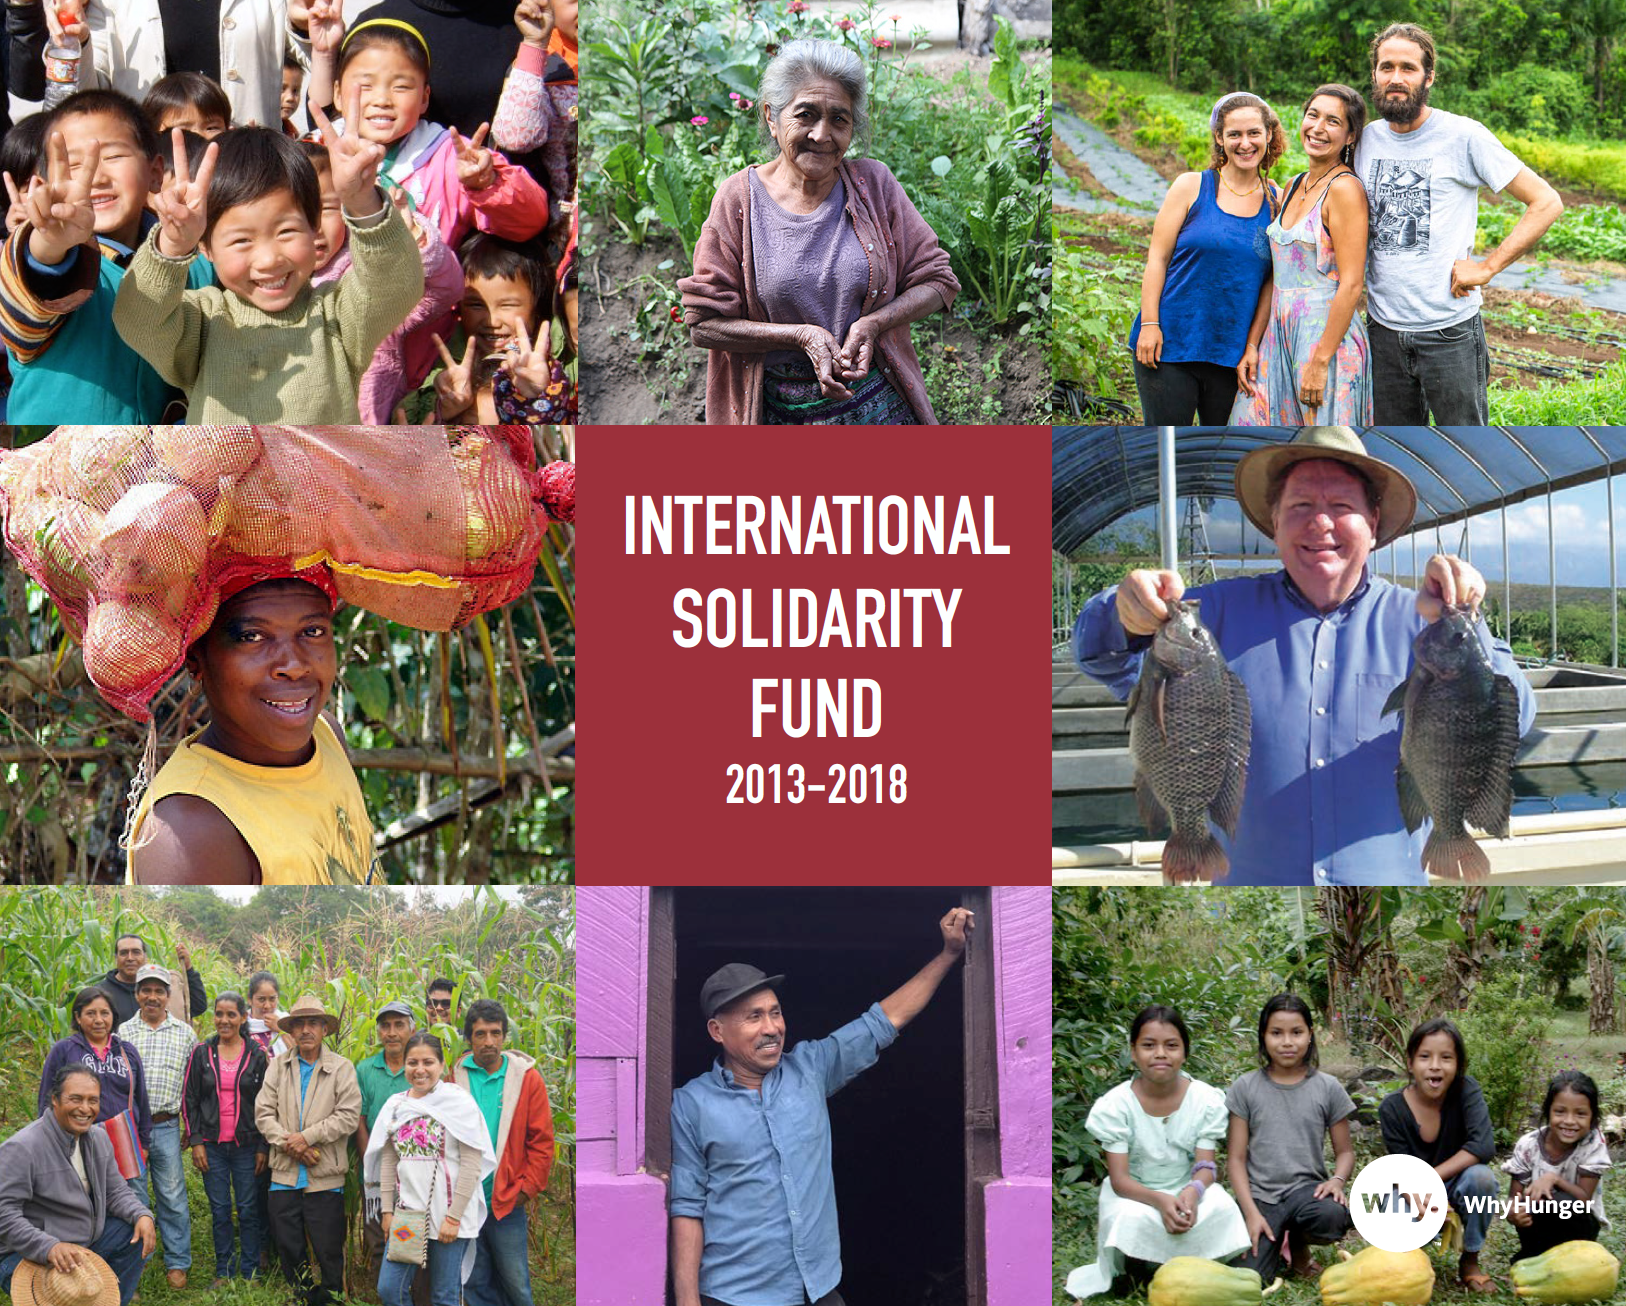 International Solidarity Fund 2013-2018